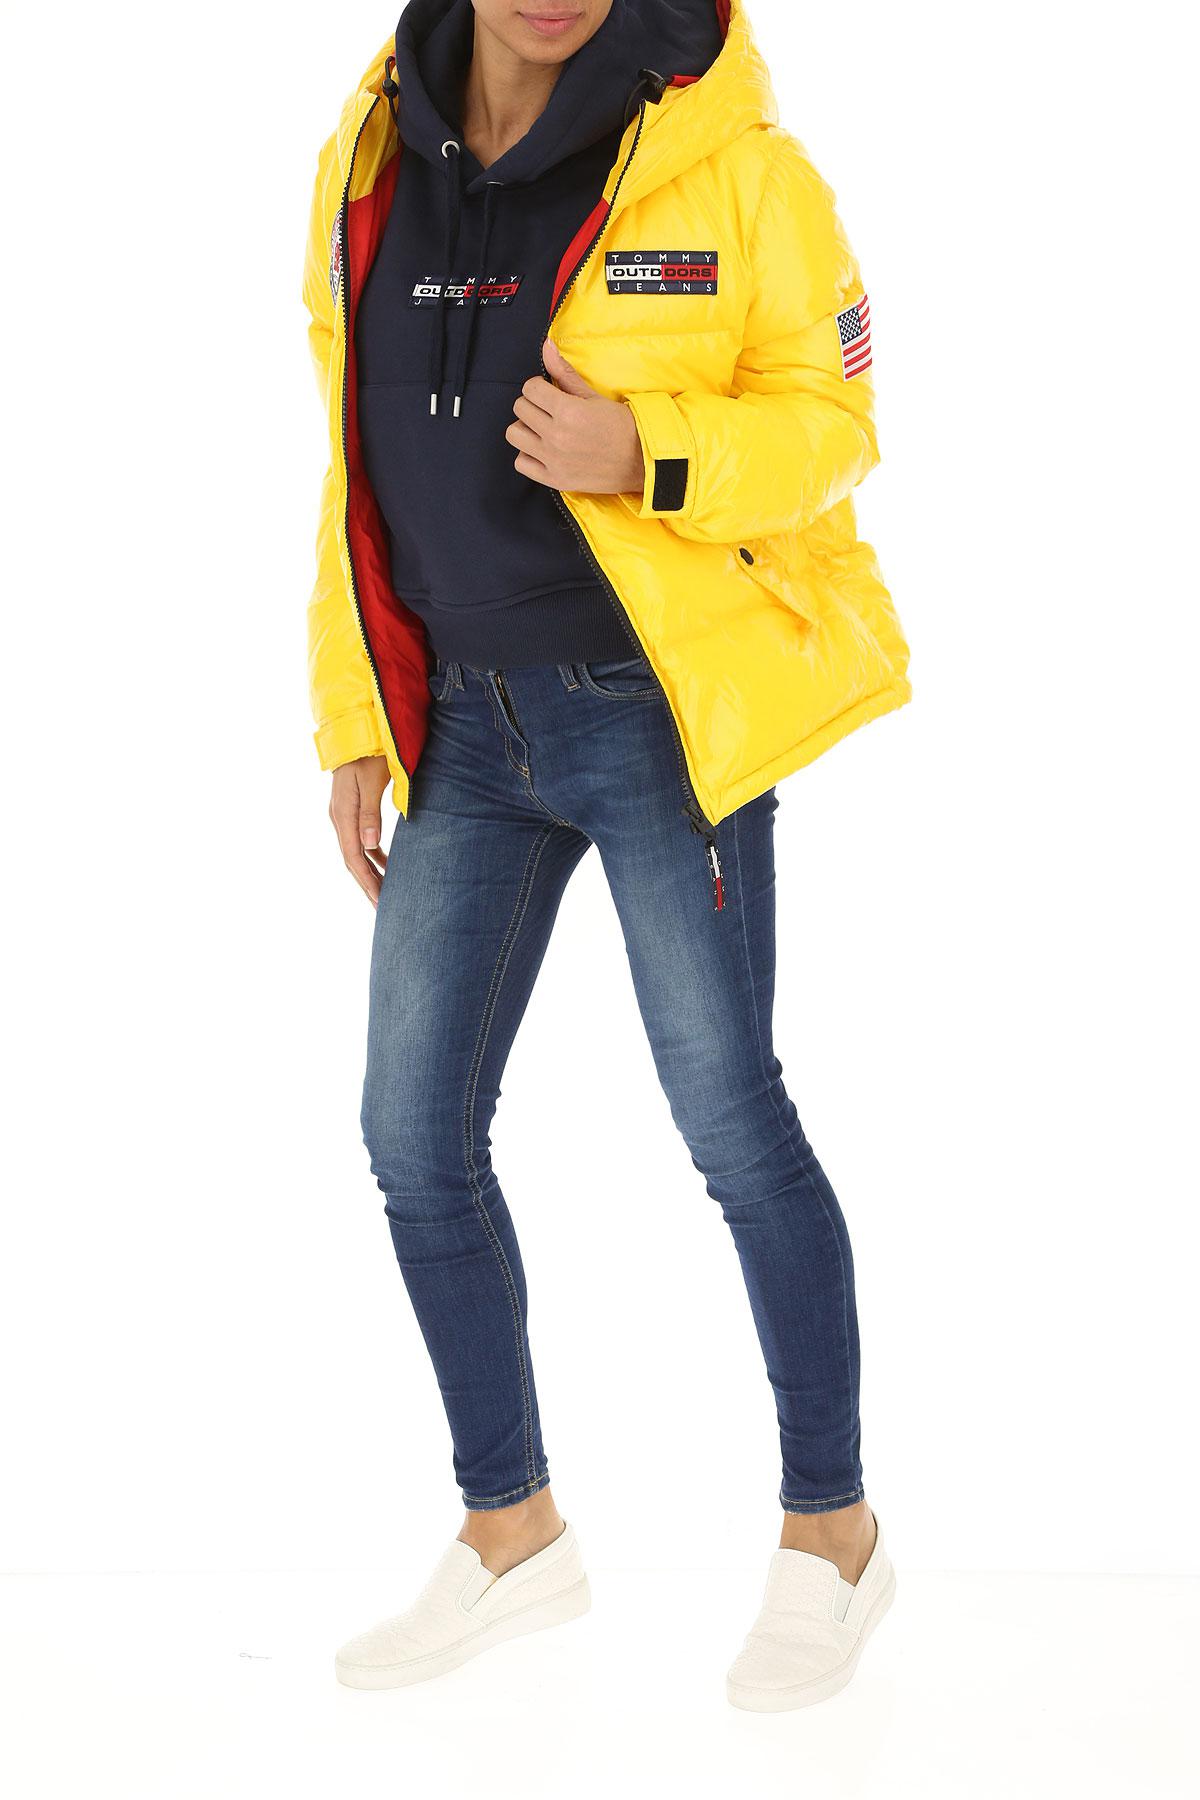 tommy hilfiger jacket womens yellow